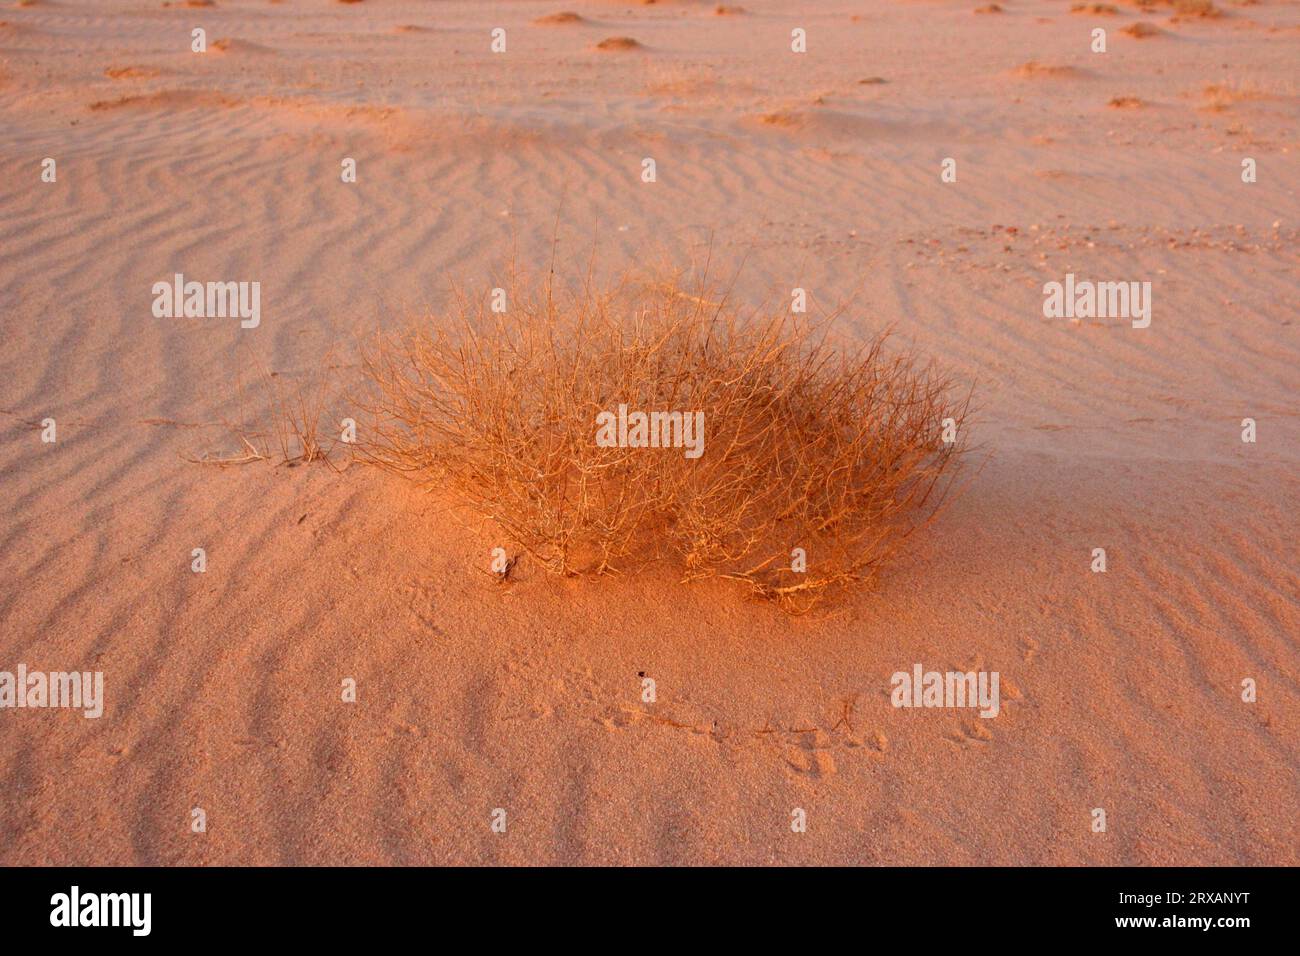 A withered bush near the sand field of Timsah, Libya Stock Photo